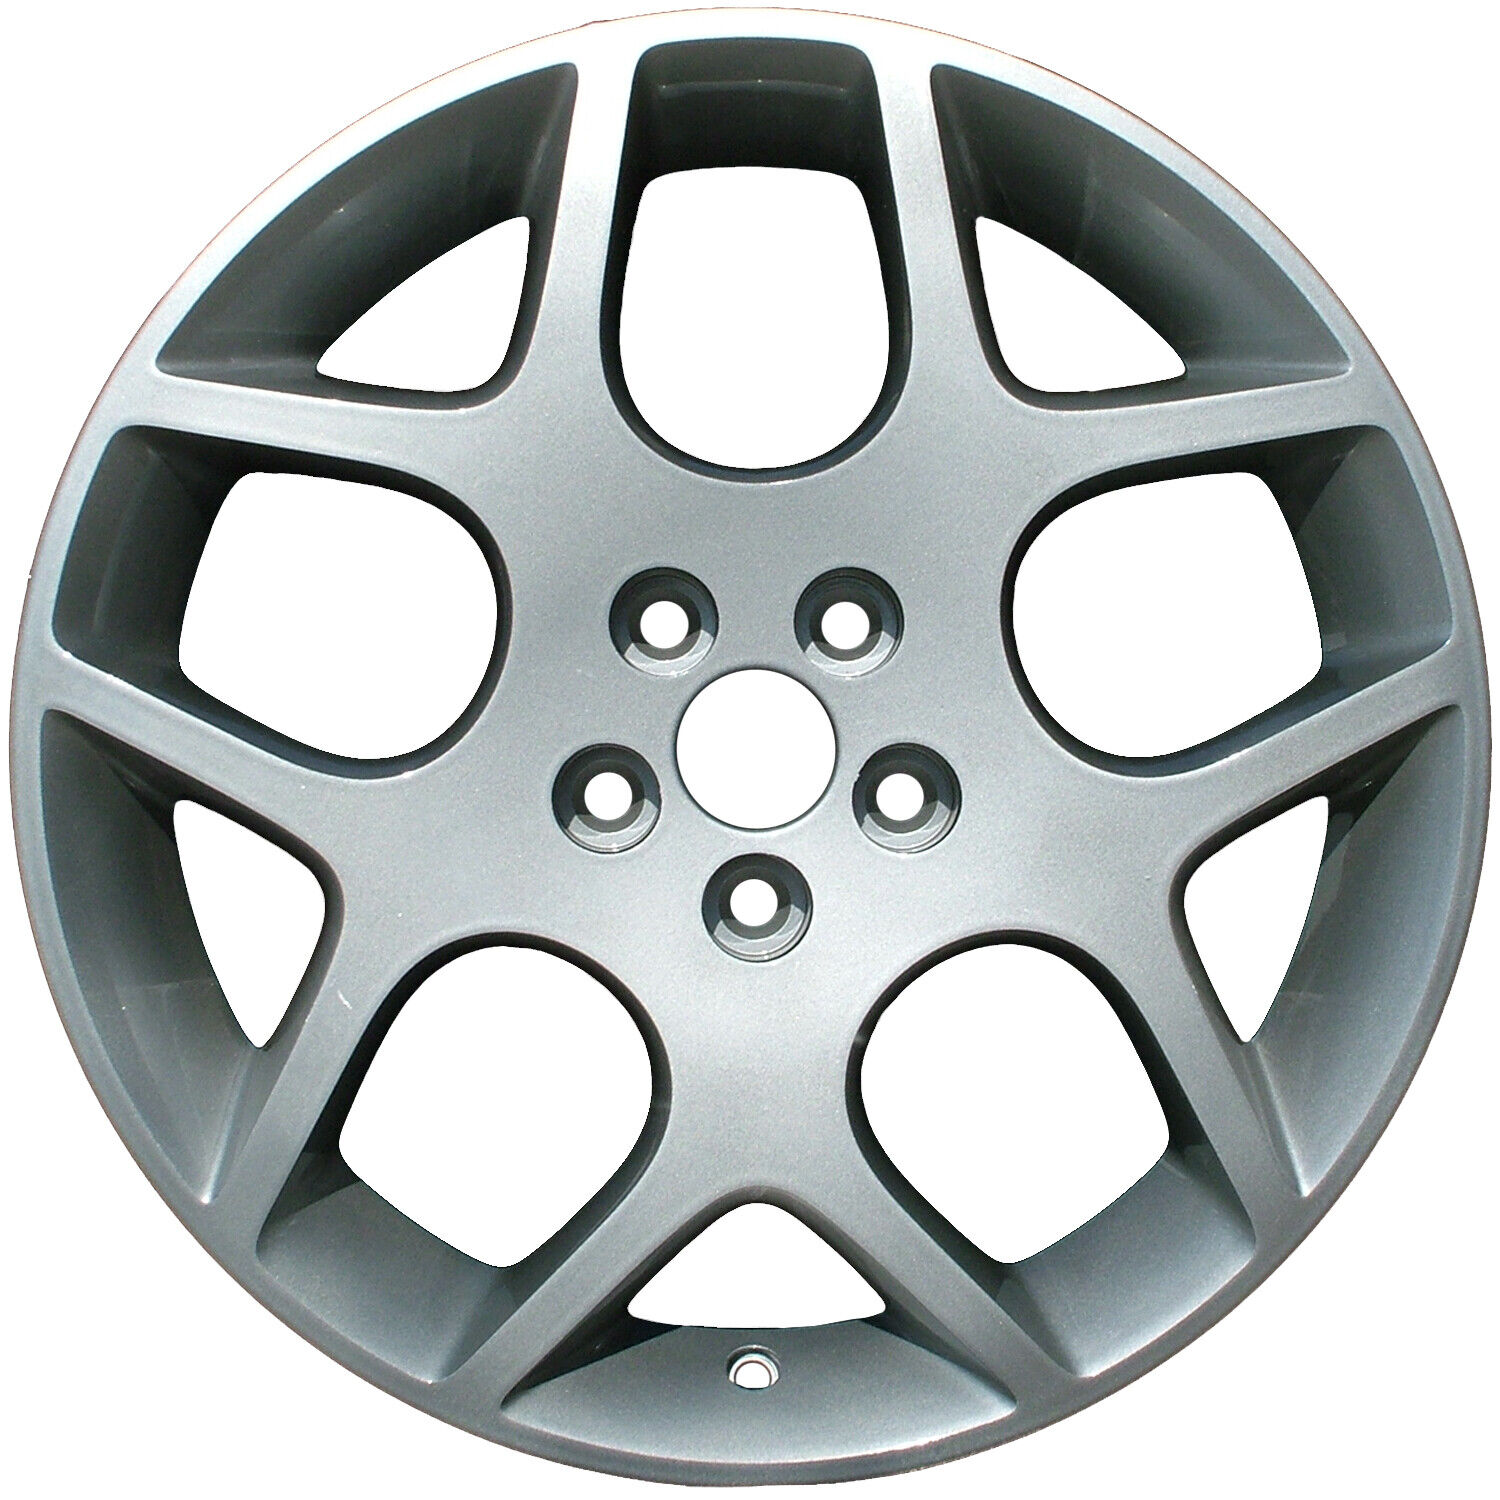 02196 Reconditioned OEM Aluminum Wheel 17x6 fits 2003-2005 Dodge Neon